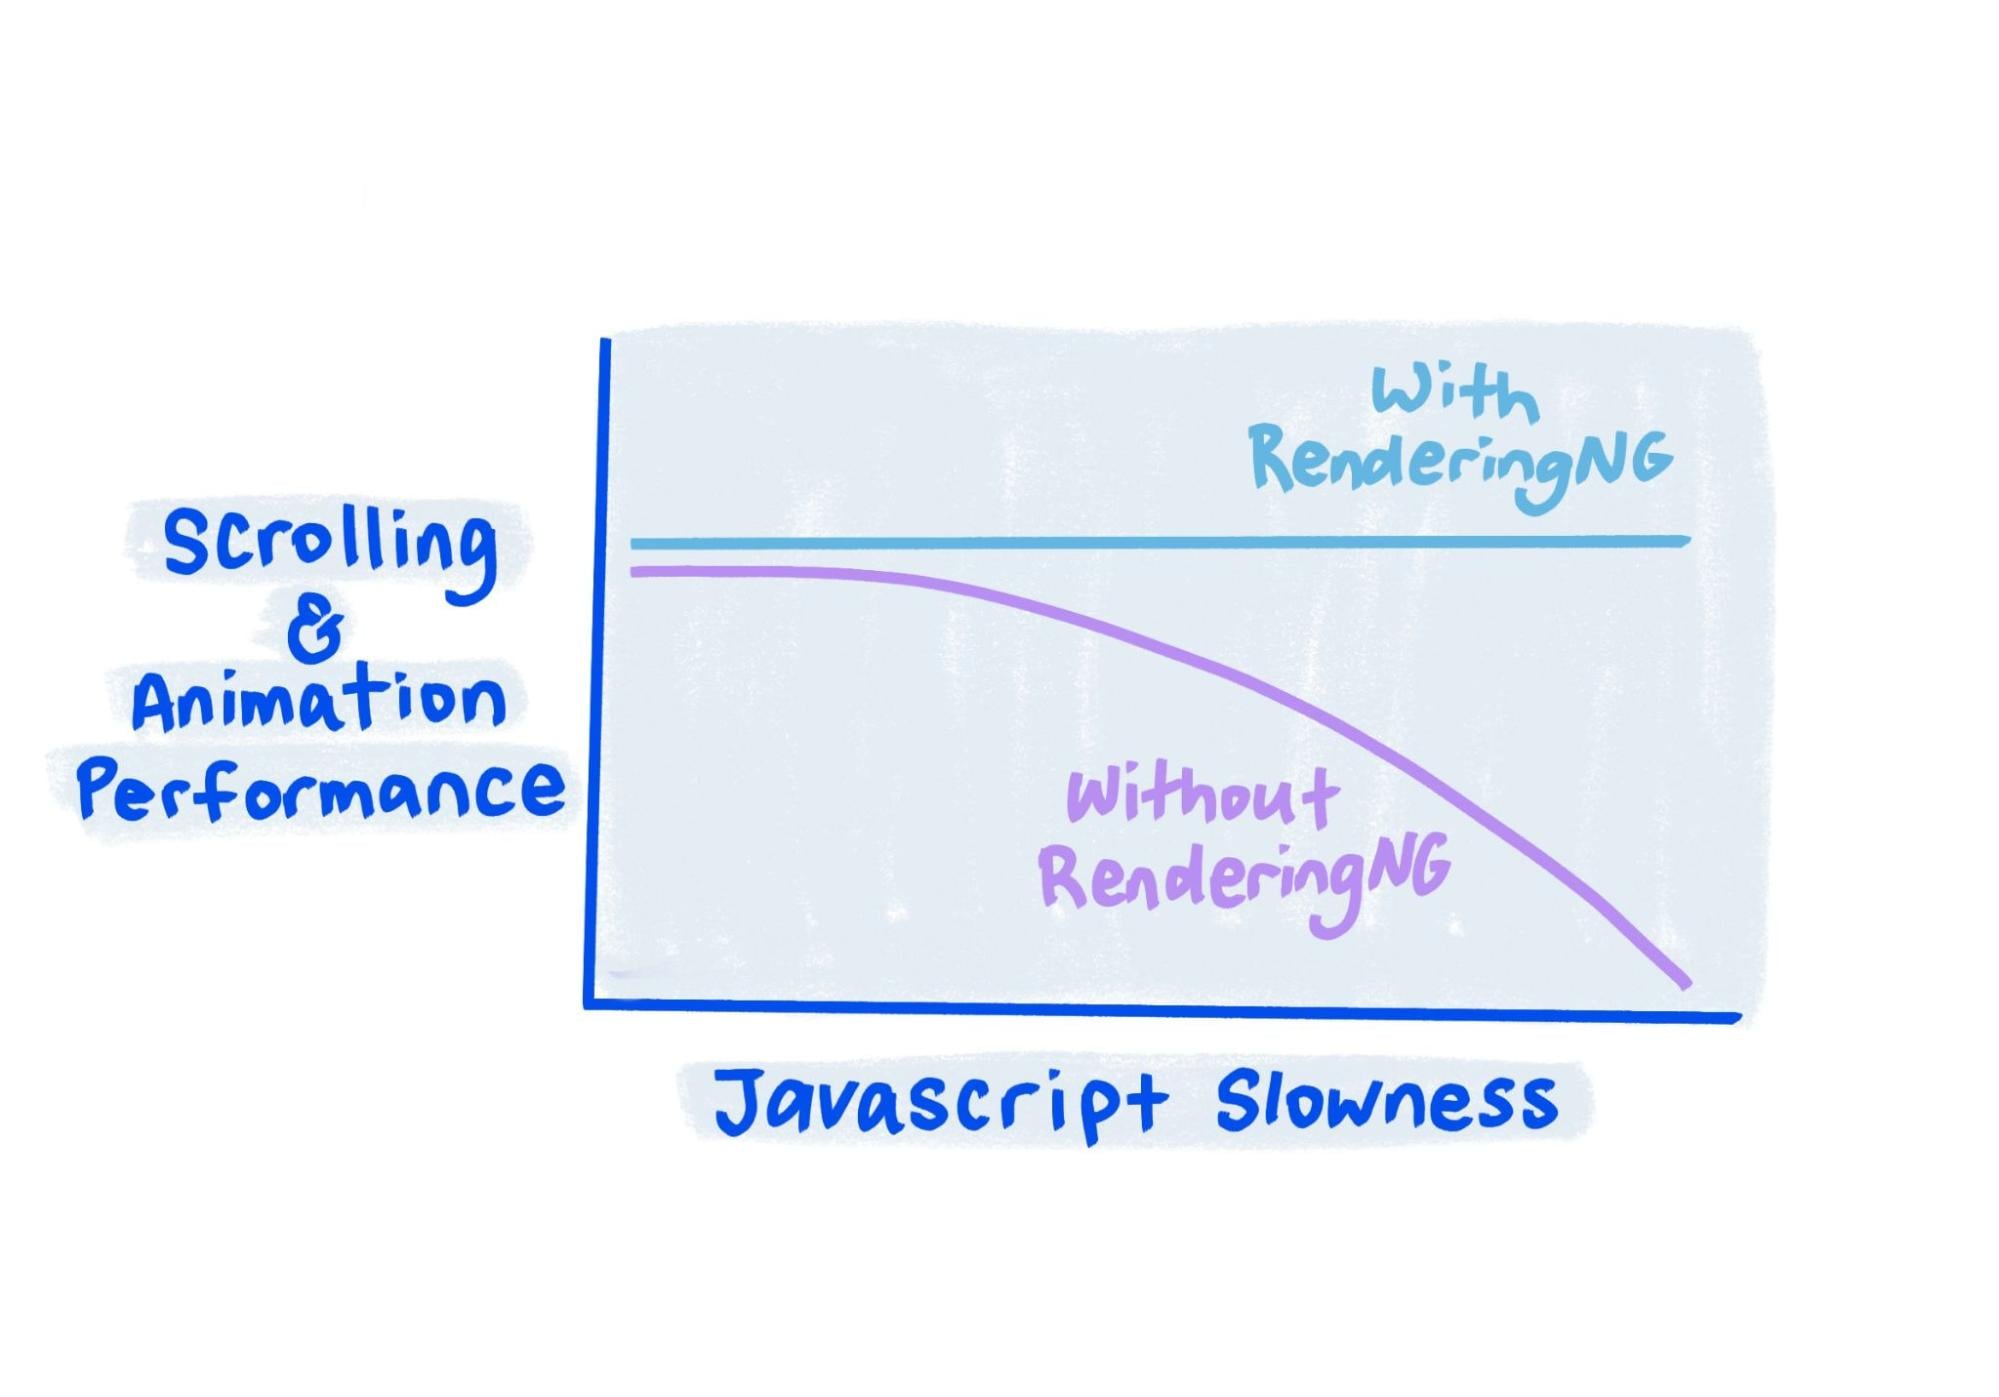 Sketch 显示，使用 RenderingNG 时，即使 JavaScript 速度非常慢，性能也保持稳定。